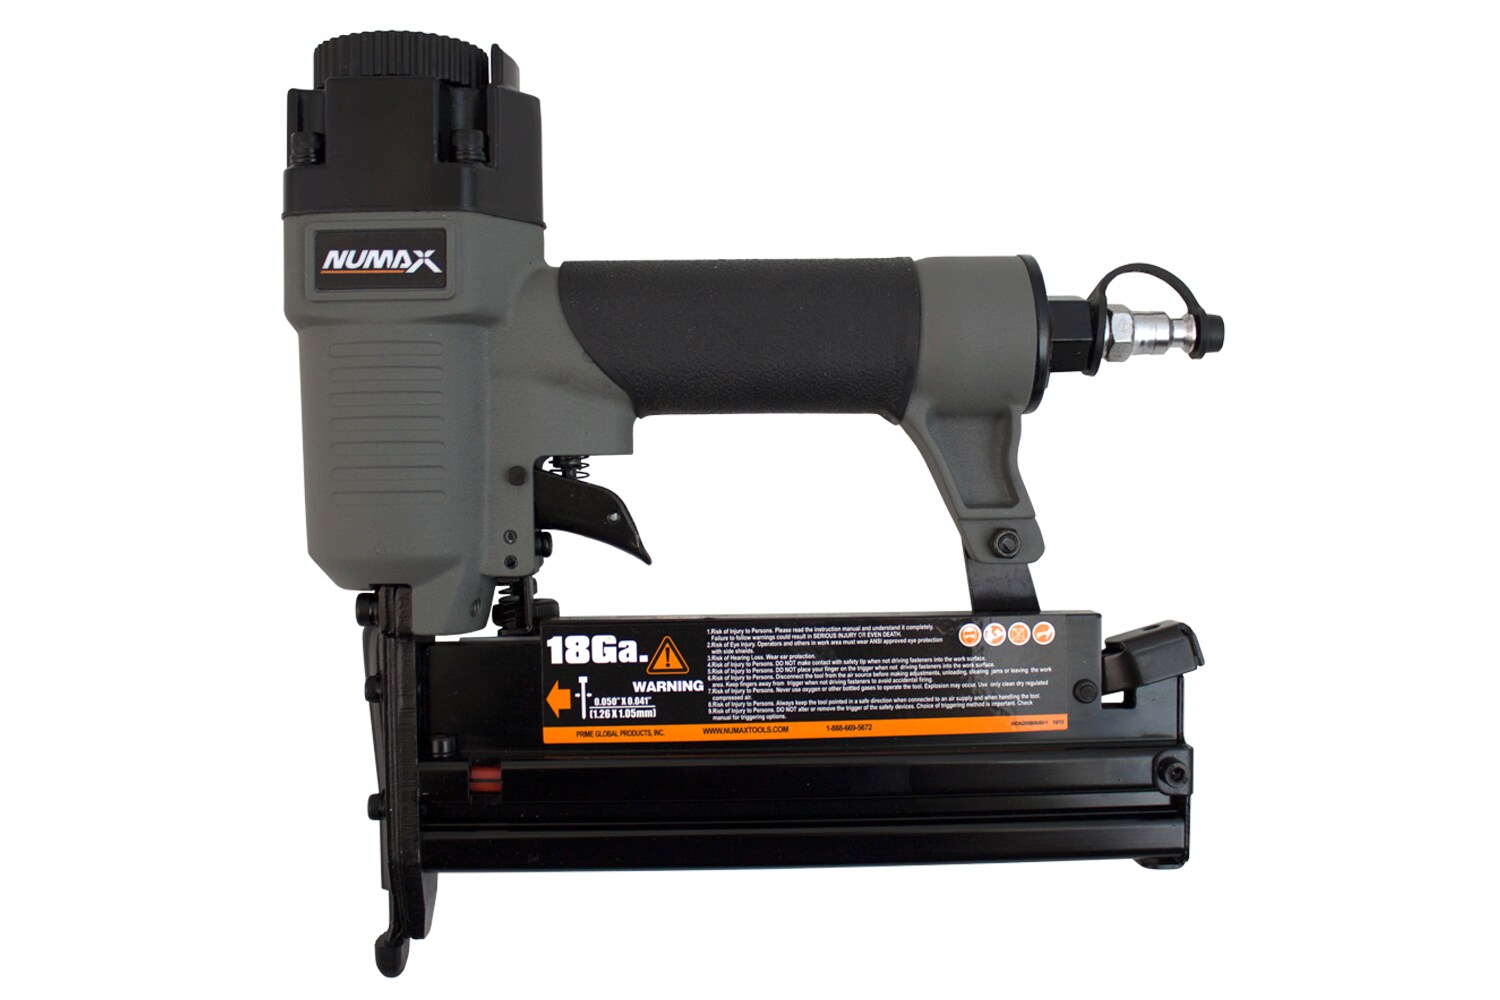 Numax S2118G2 18-Gauge 2-in-1 Brad Nail Gun for sale online 